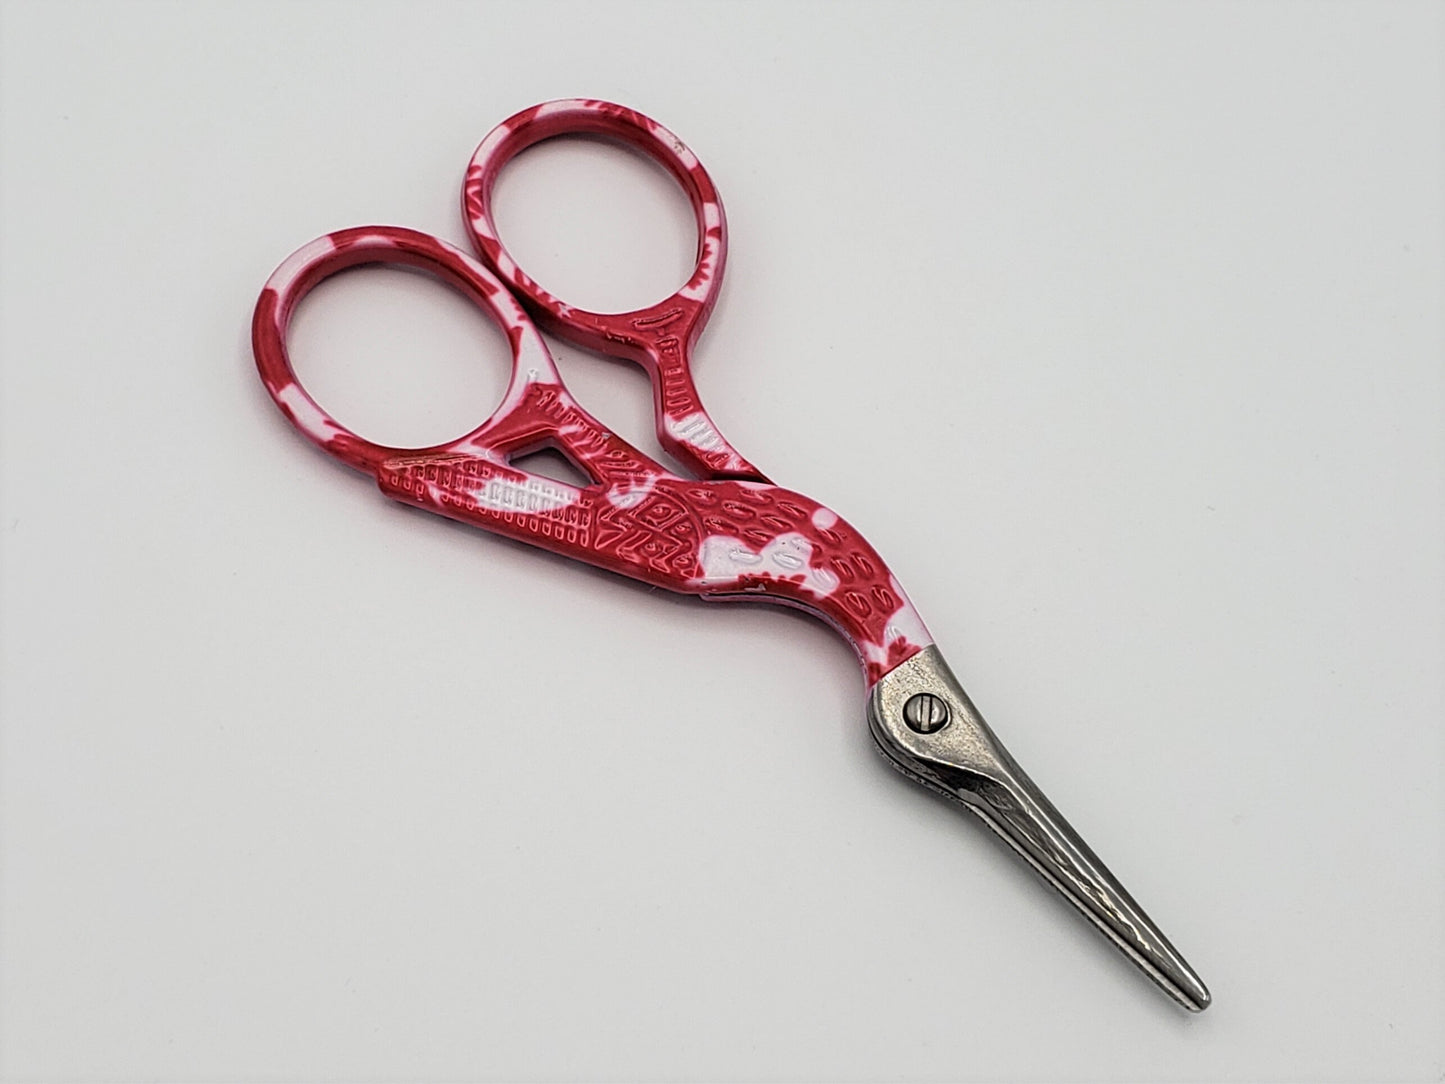 Small Craft Stork Scissors, 3.50" | Embroidery scissors, thread snips, crochet and knitting supplies, cross stitch scissors